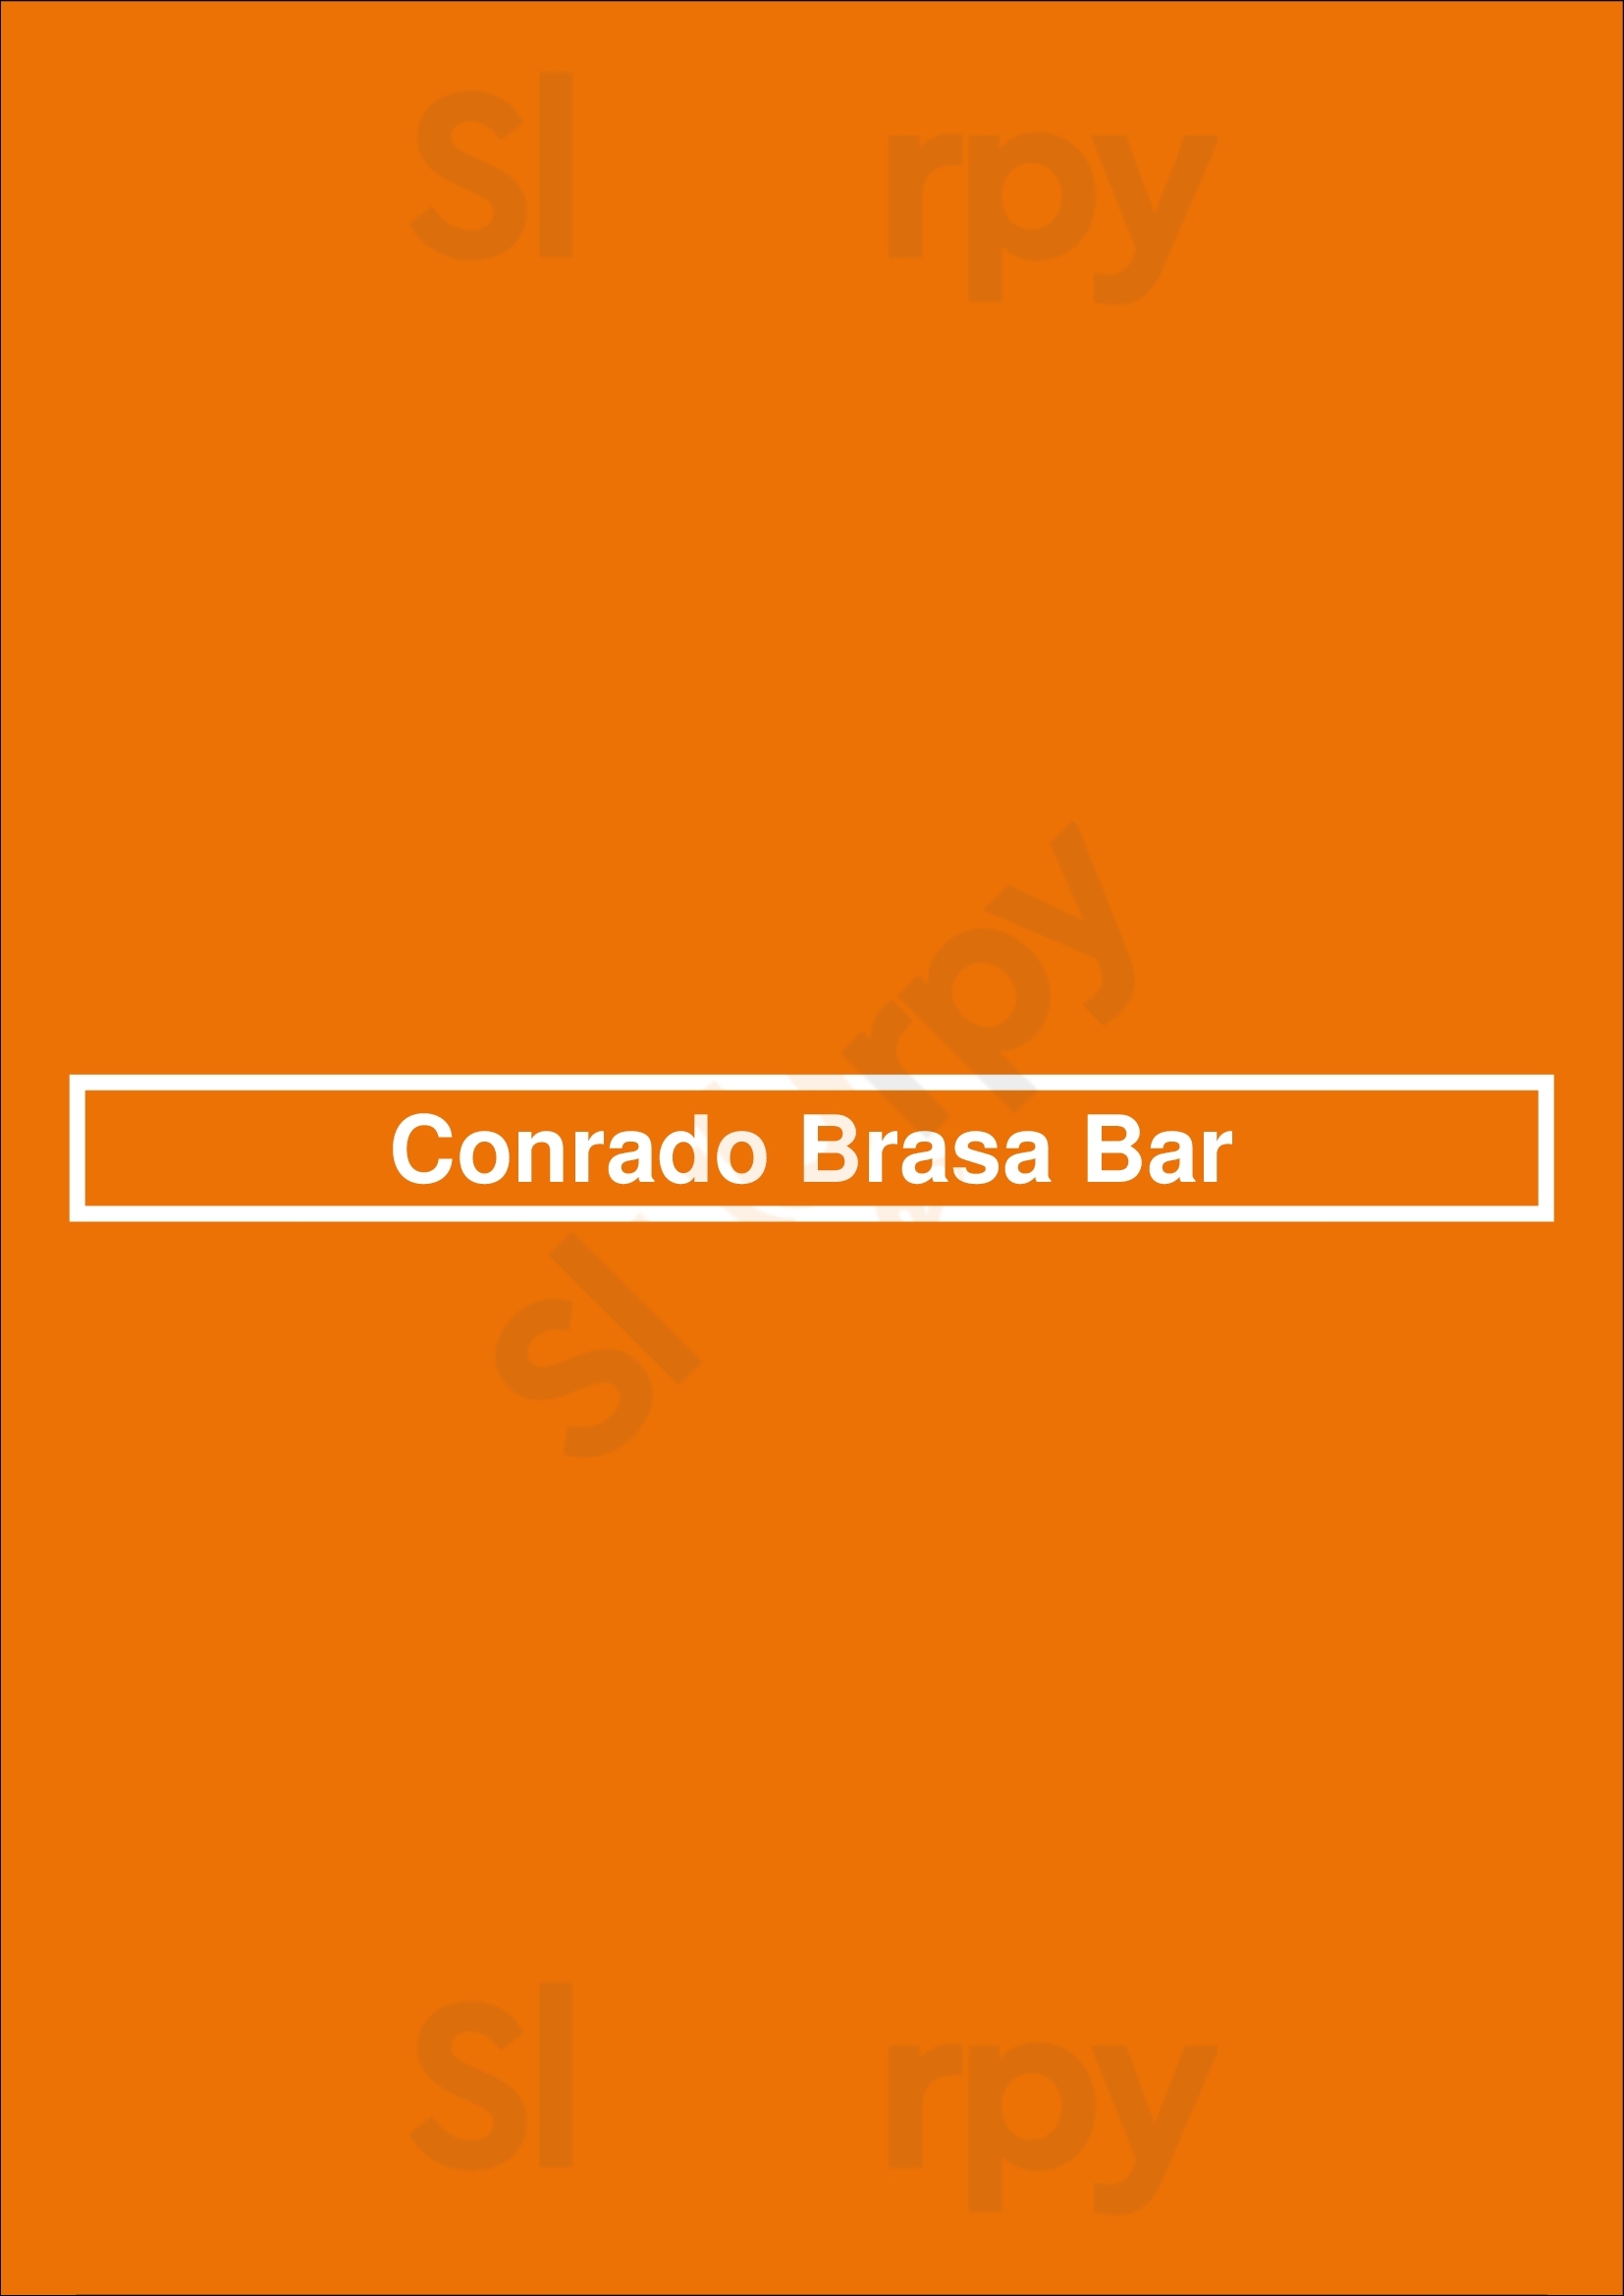 Conrado Brasa Bar Chelva Menu - 1